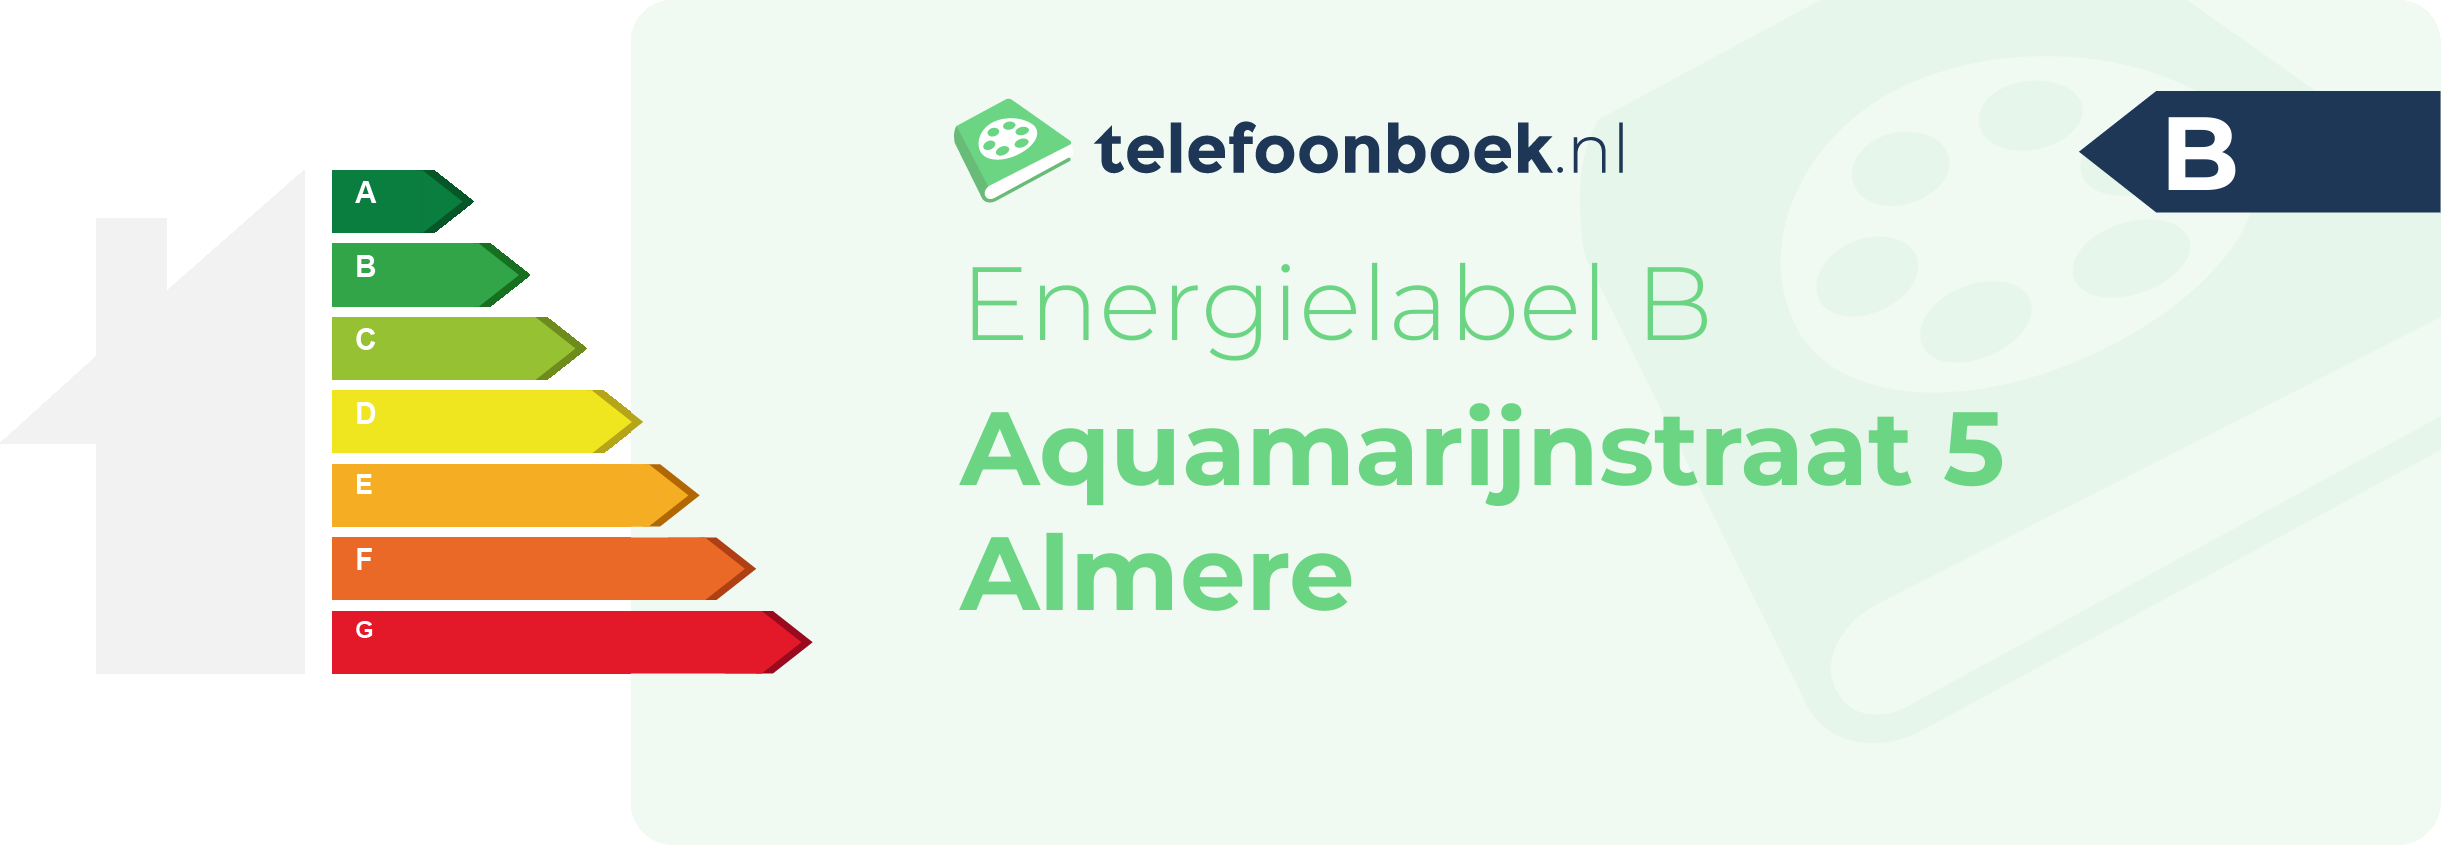 Energielabel Aquamarijnstraat 5 Almere